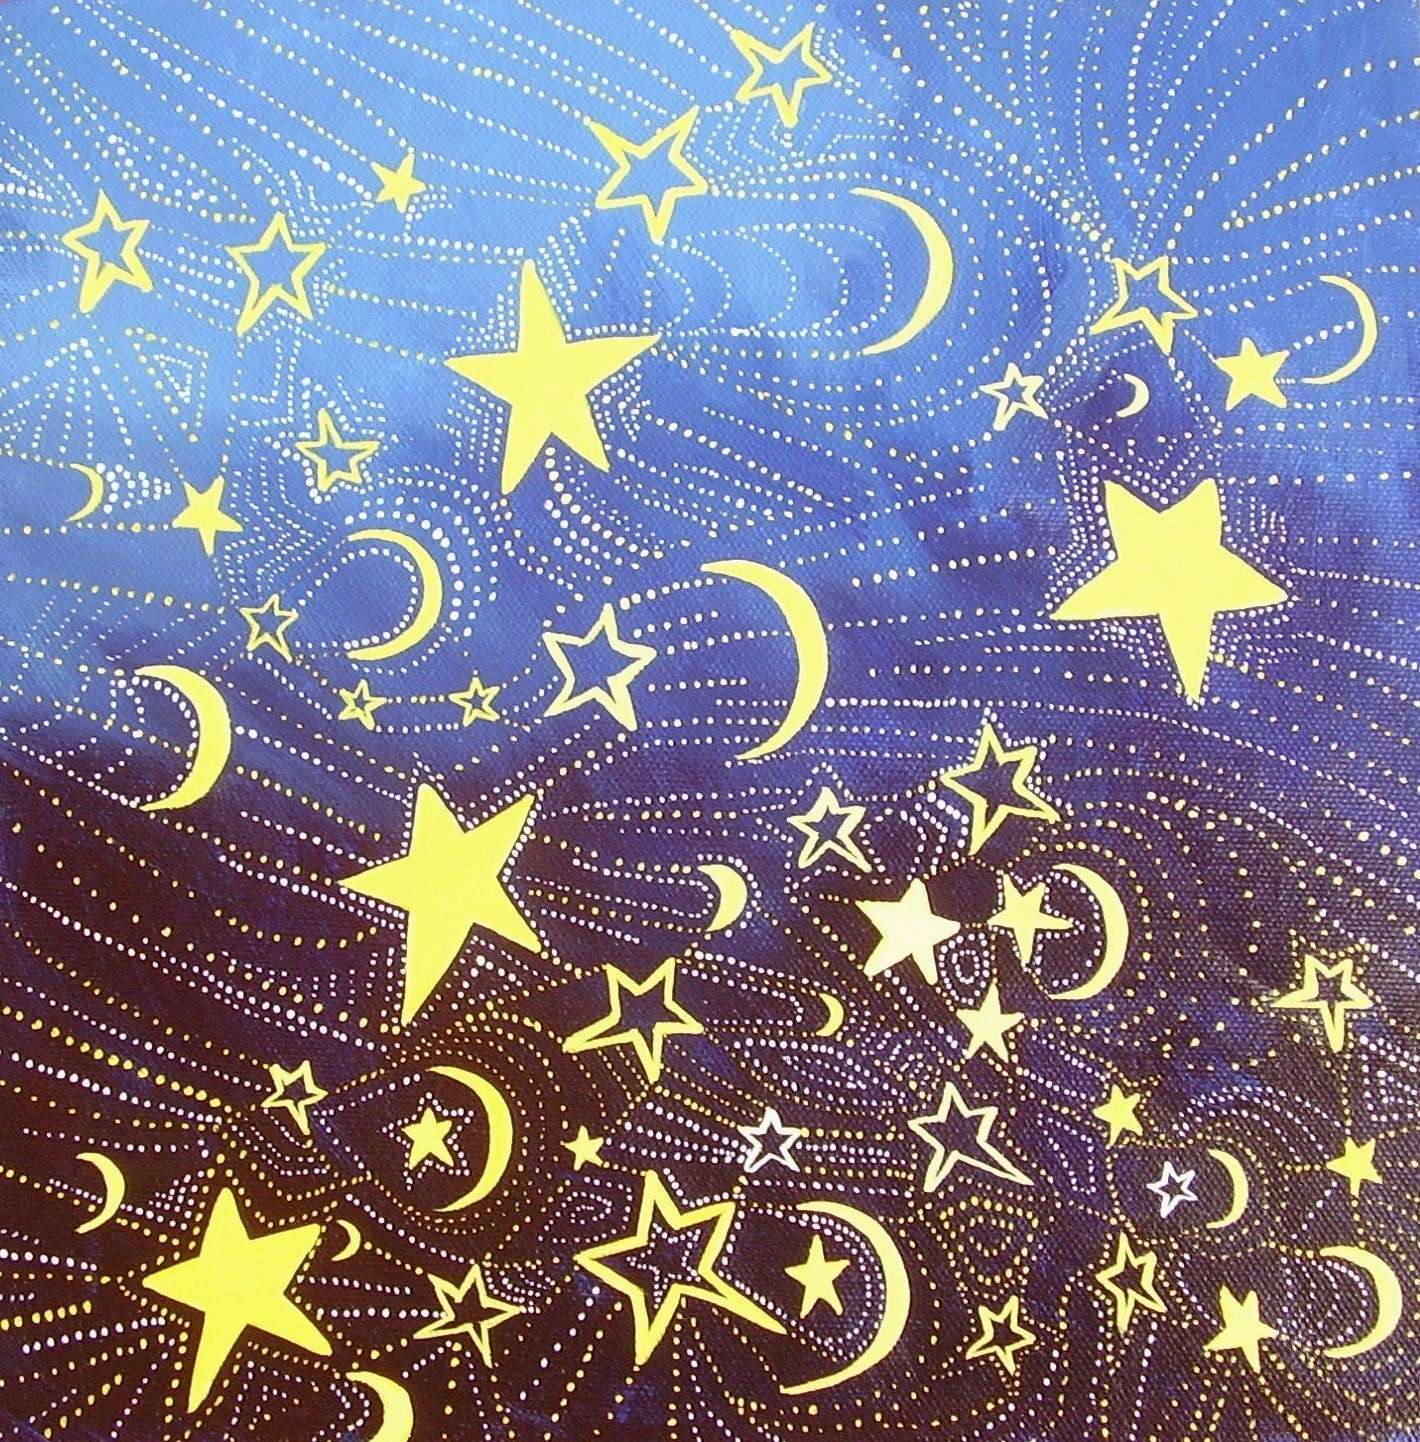 Sweet dream good night wishes wallpaper - Wallpaper